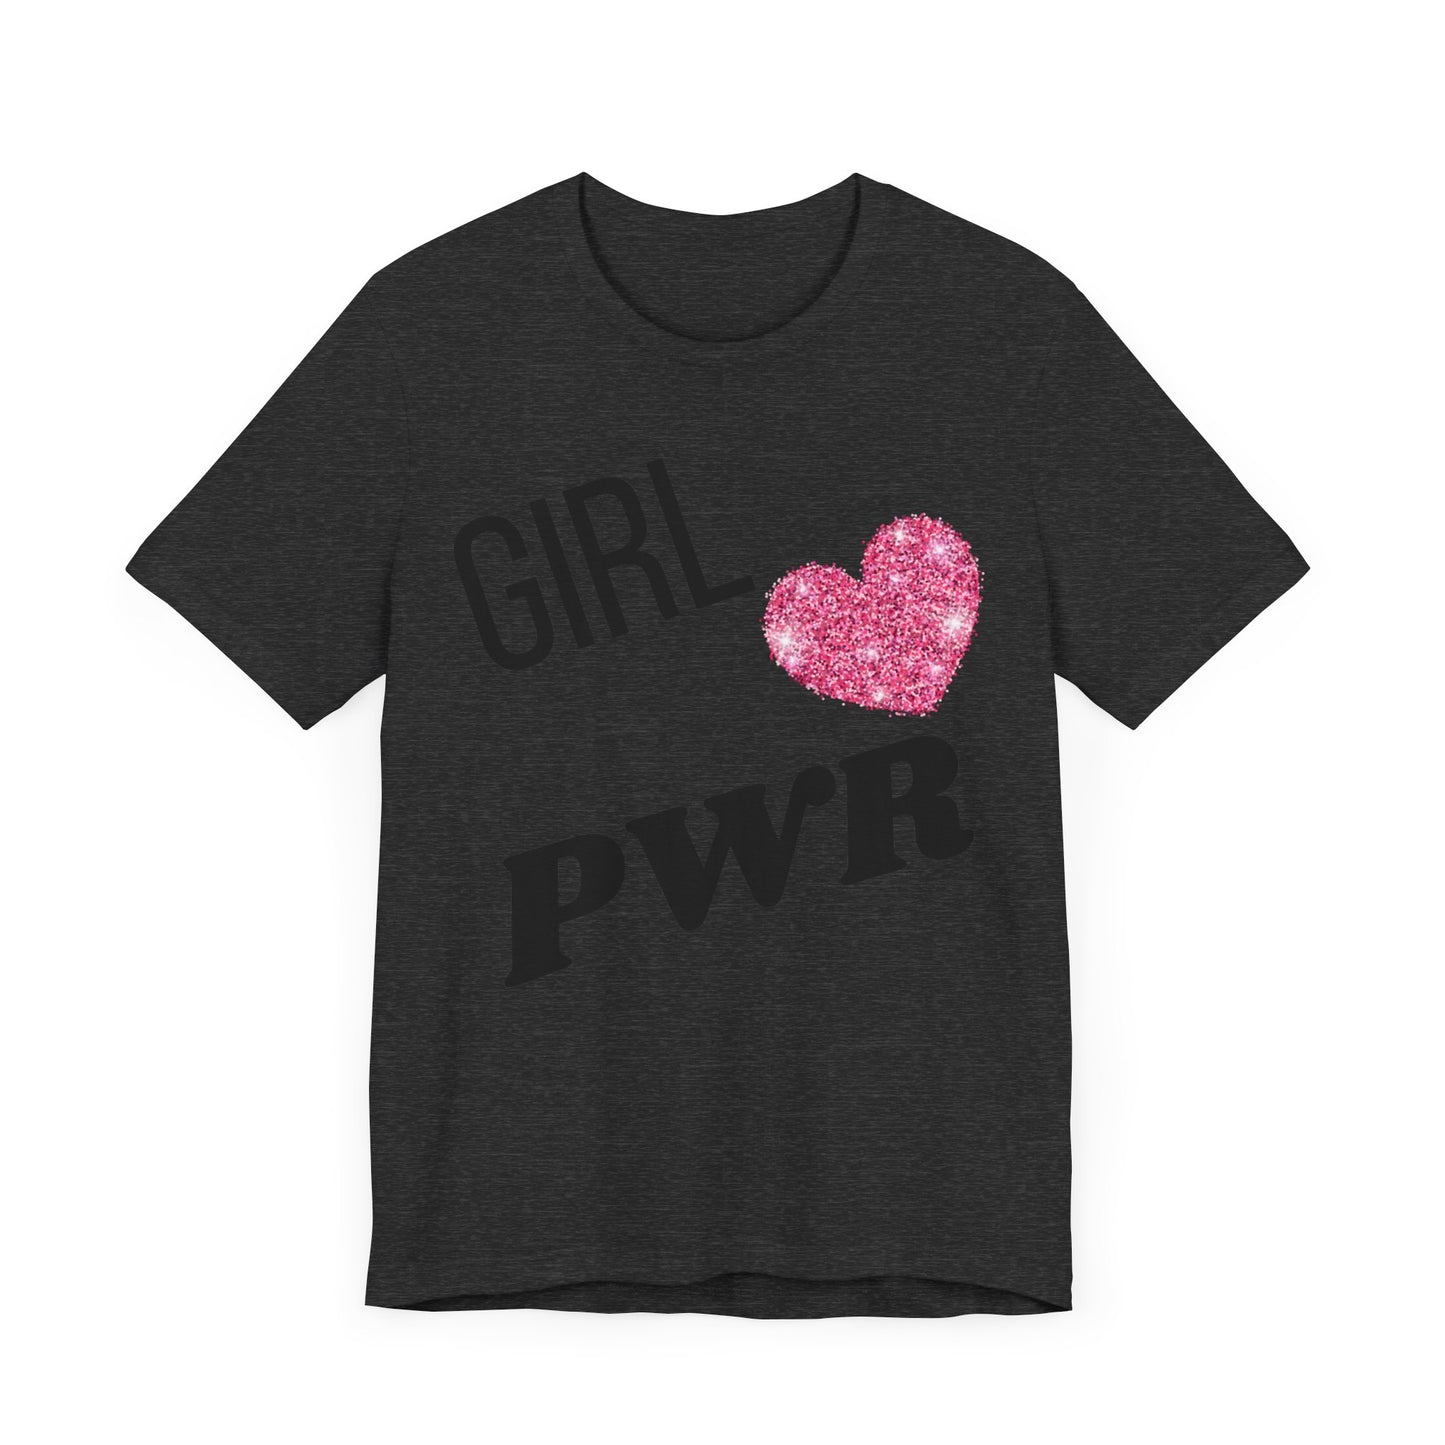 Girl pwr t shirt - daughter mother matching shirts